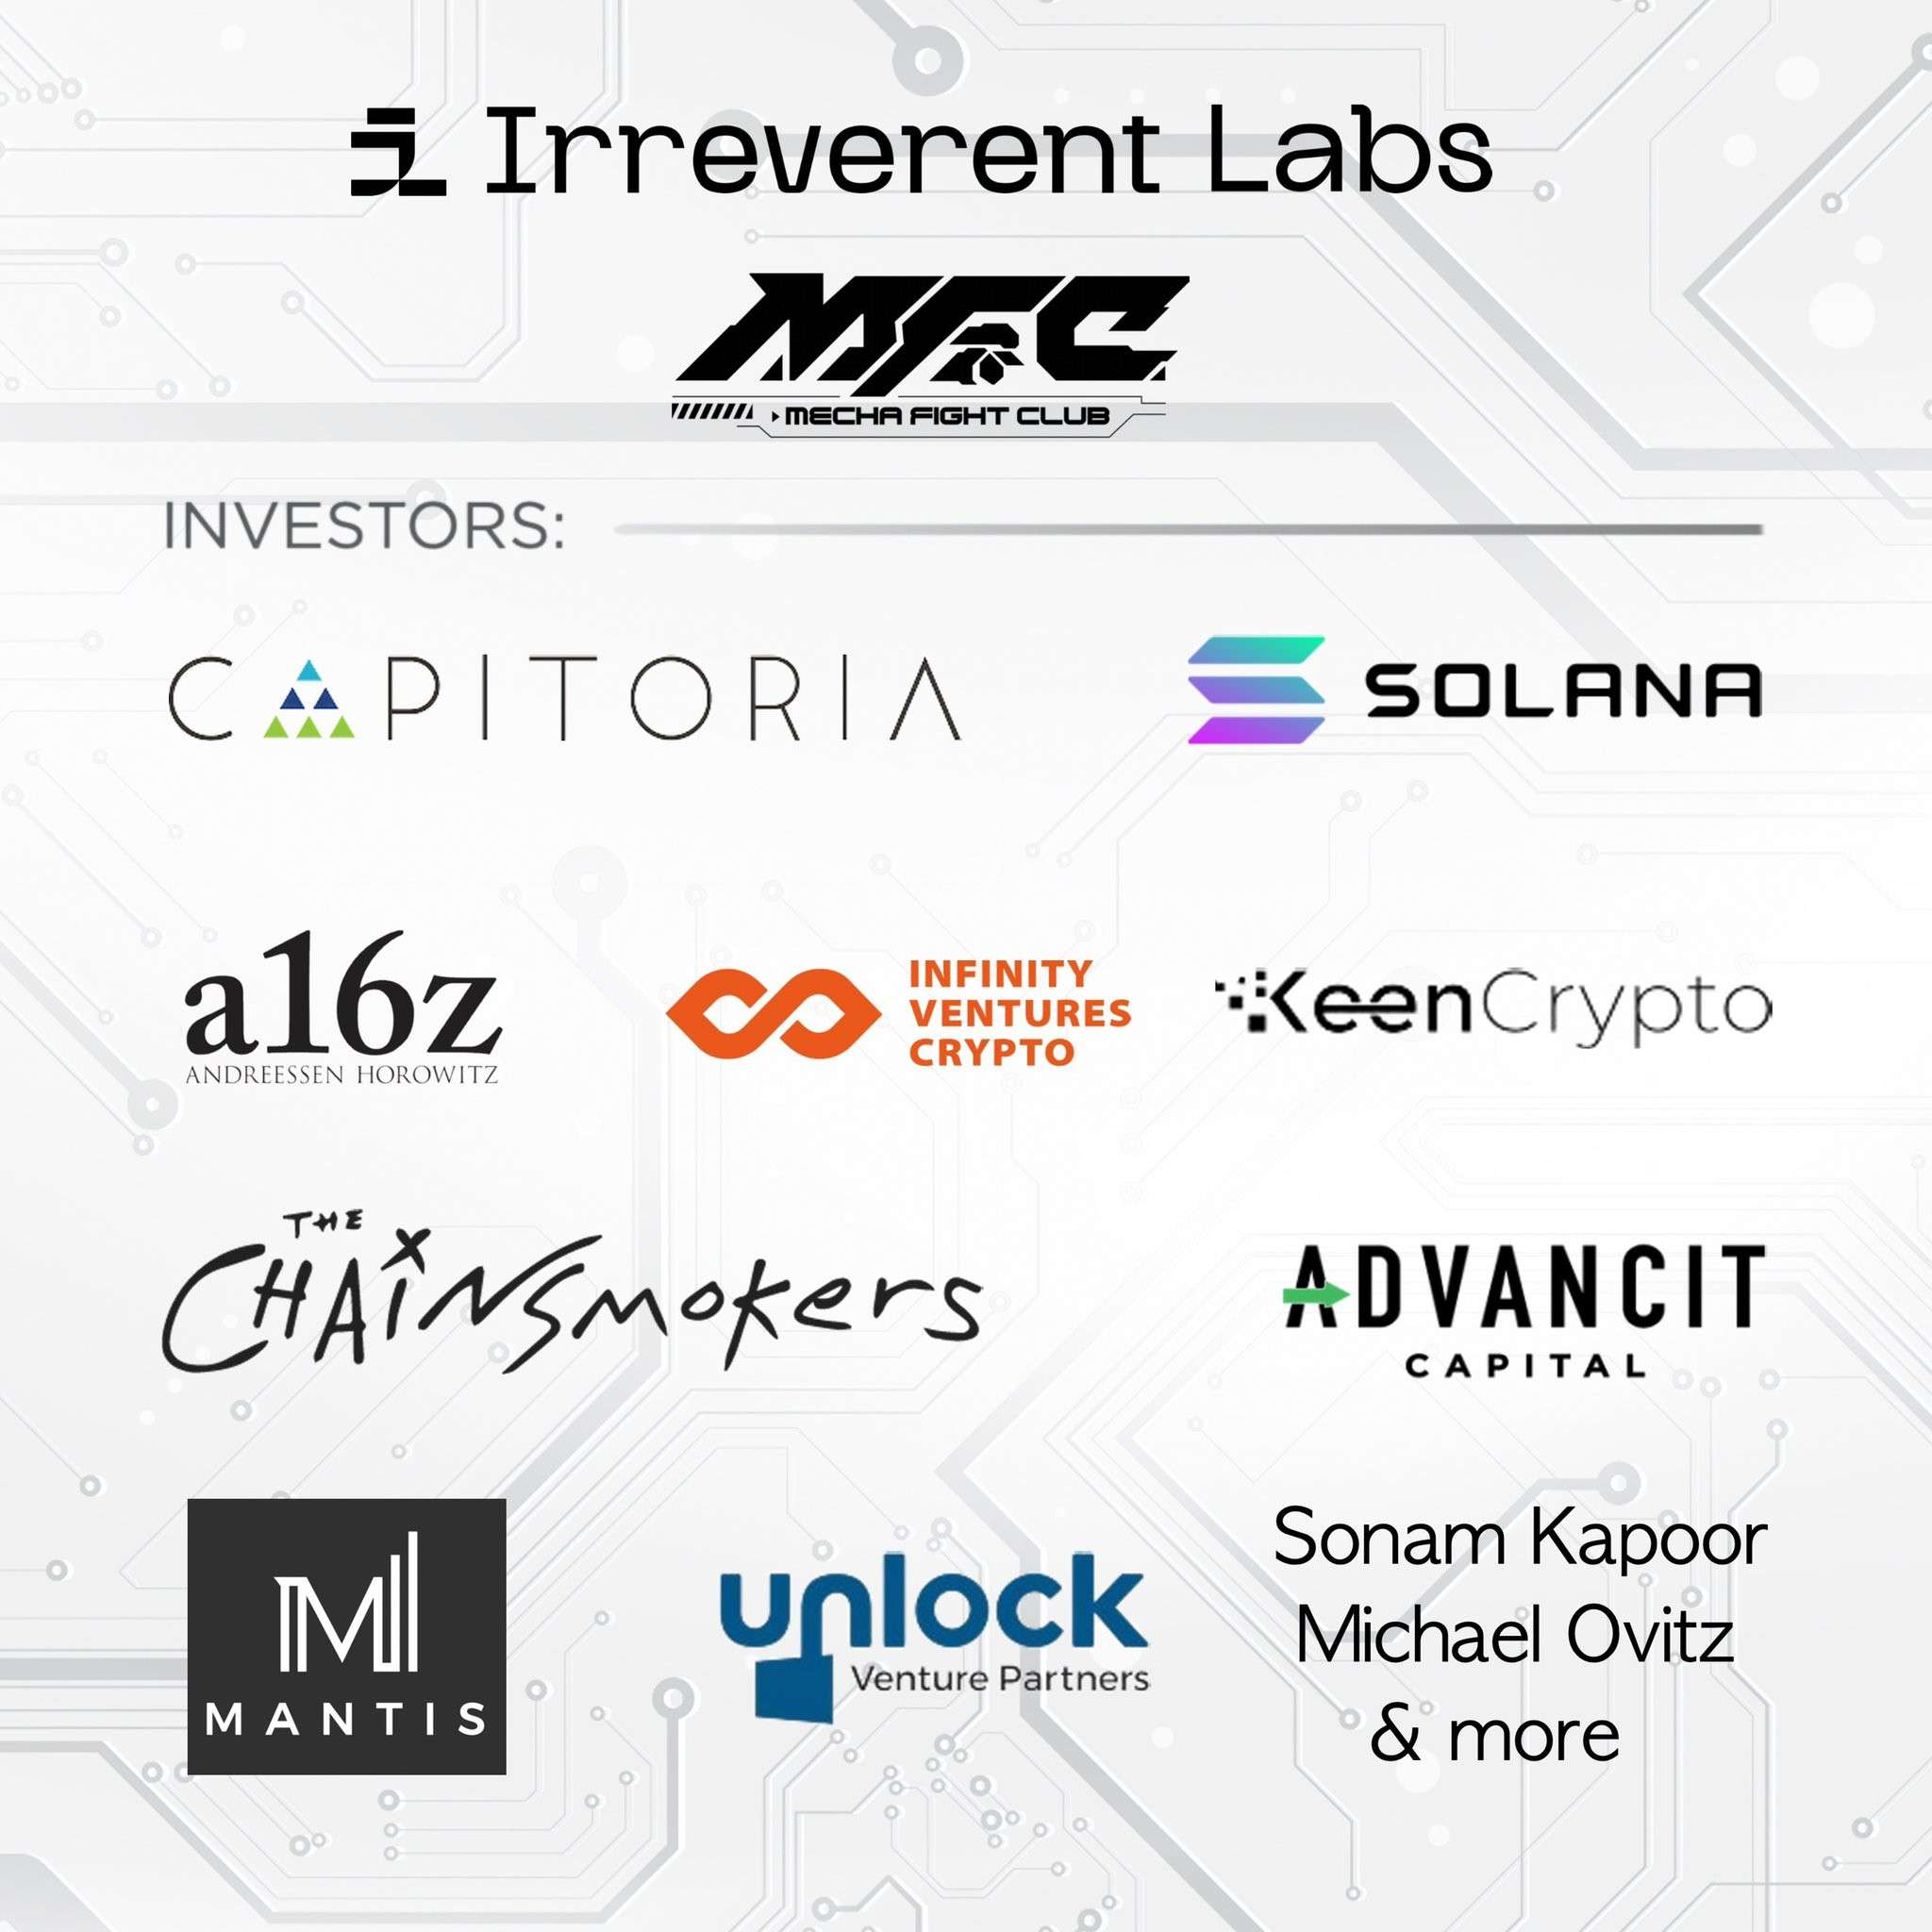 Investor of Irreverant Labs